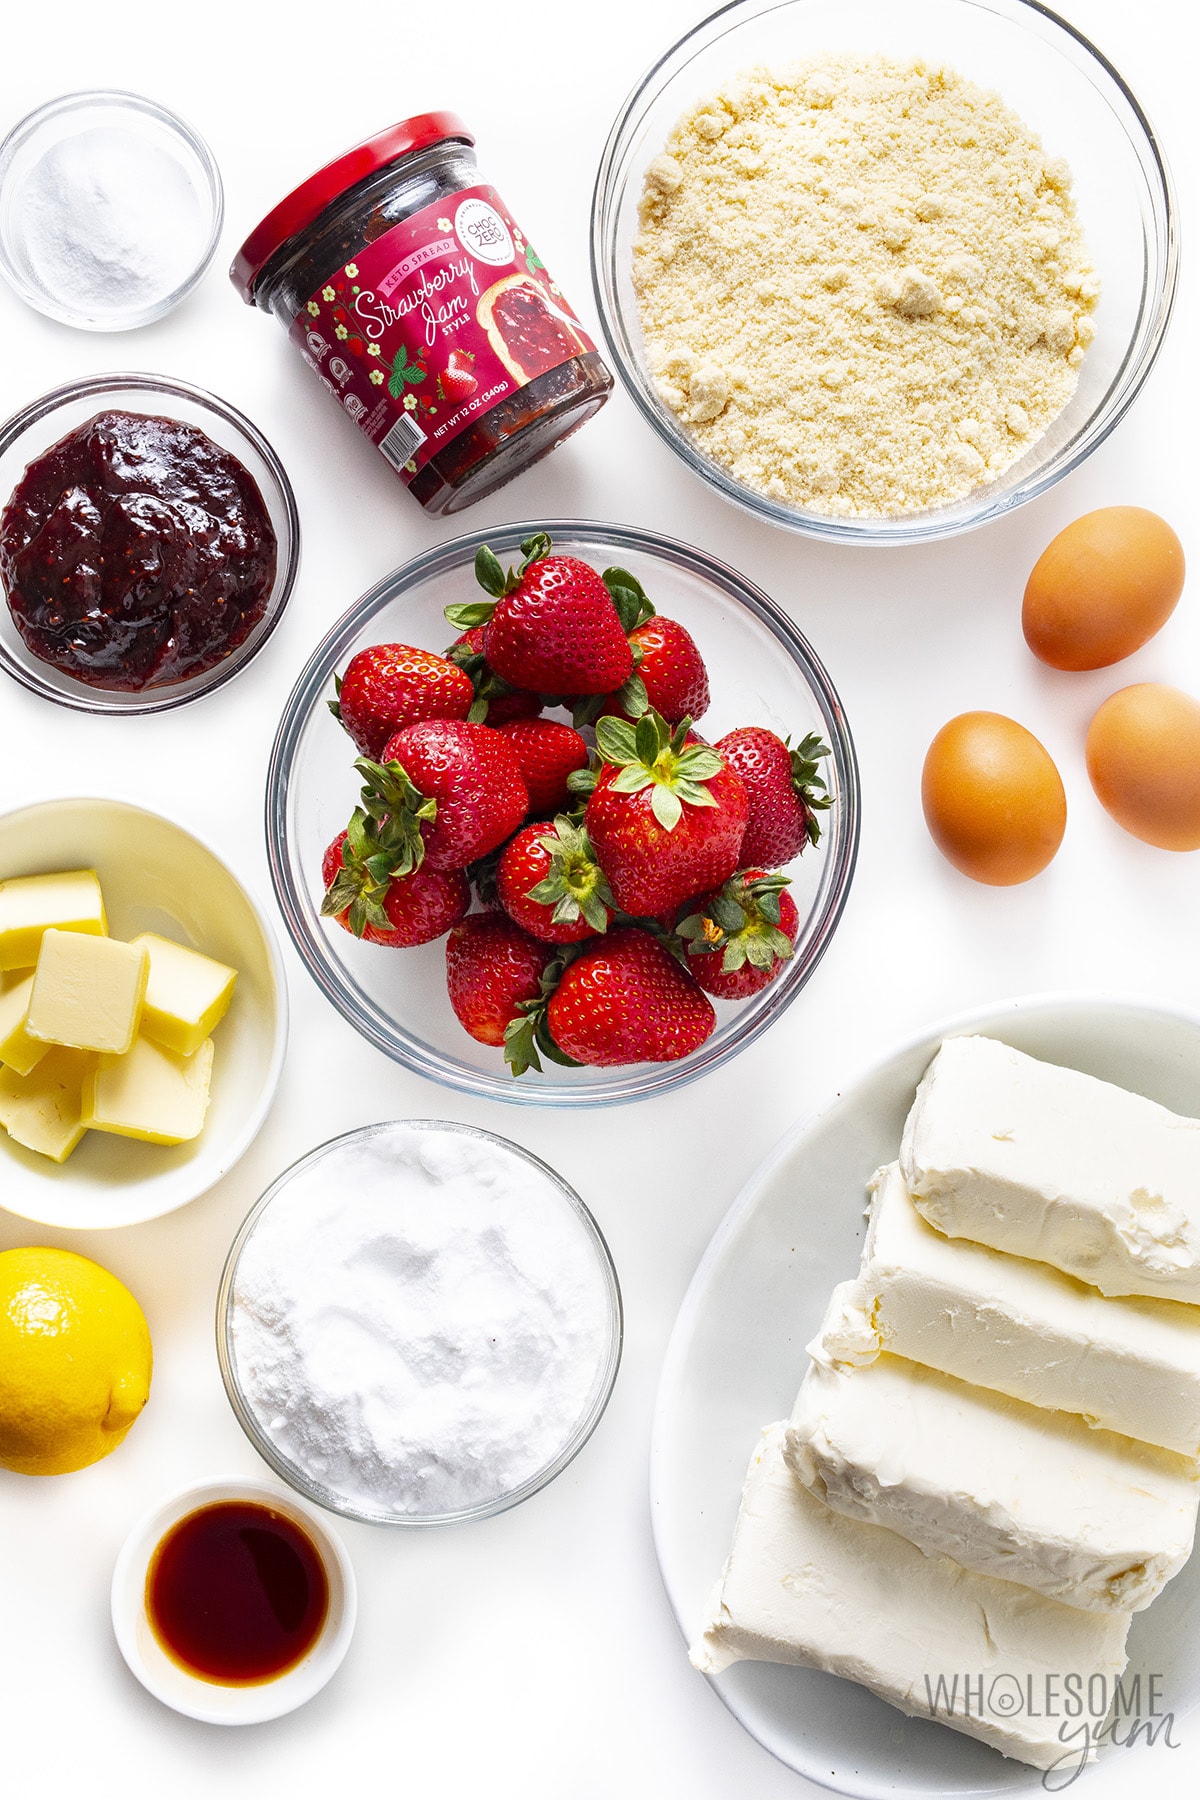 Sugar-free strawberry cheesecake ingredients.